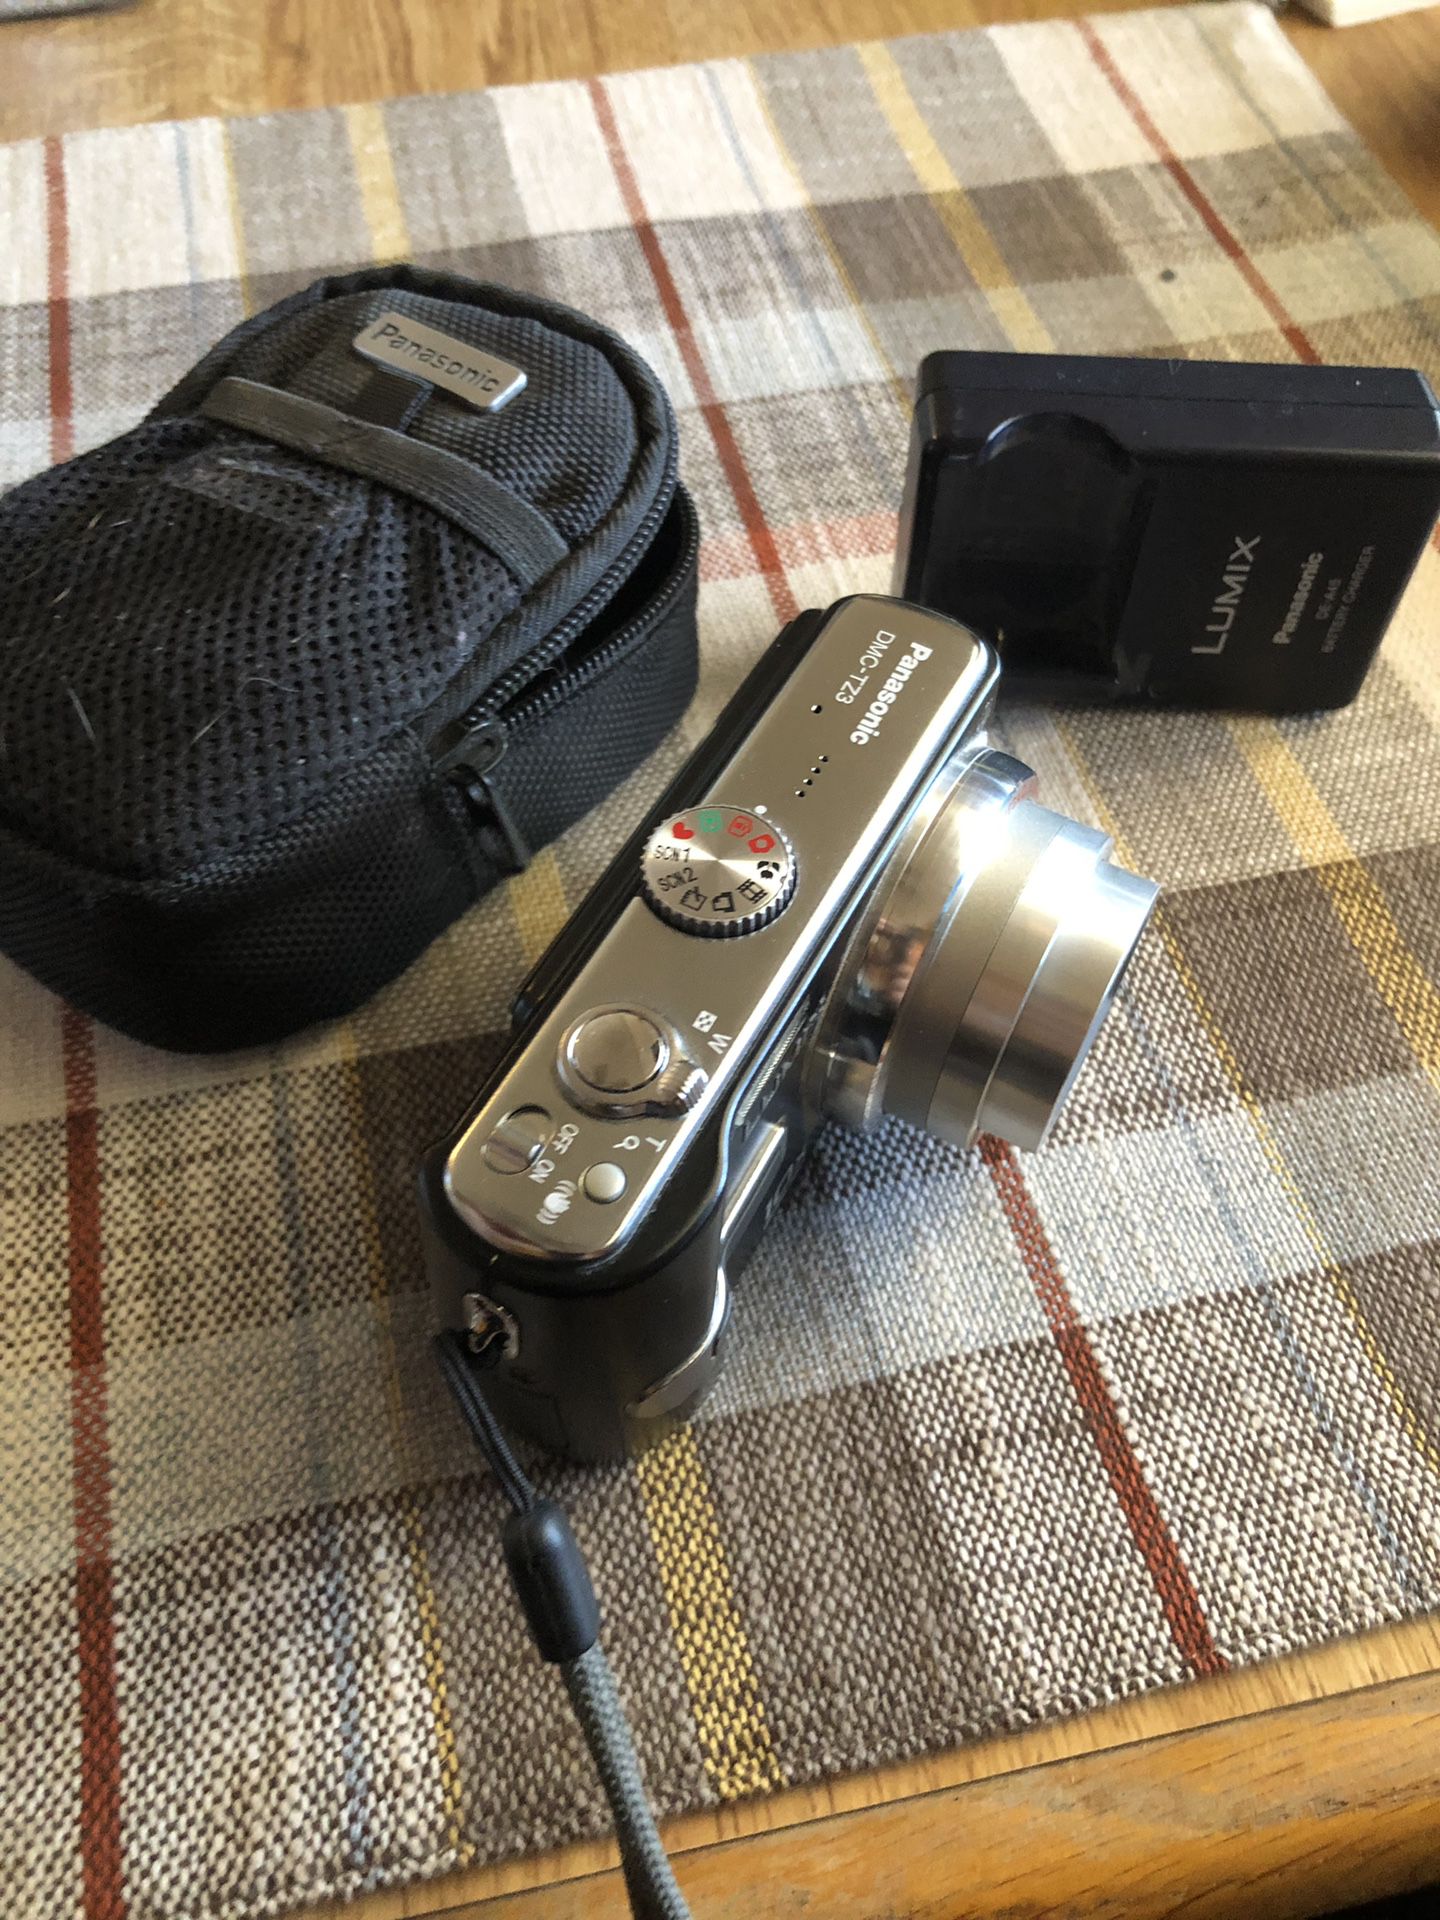 Panosonic lumix digital camera